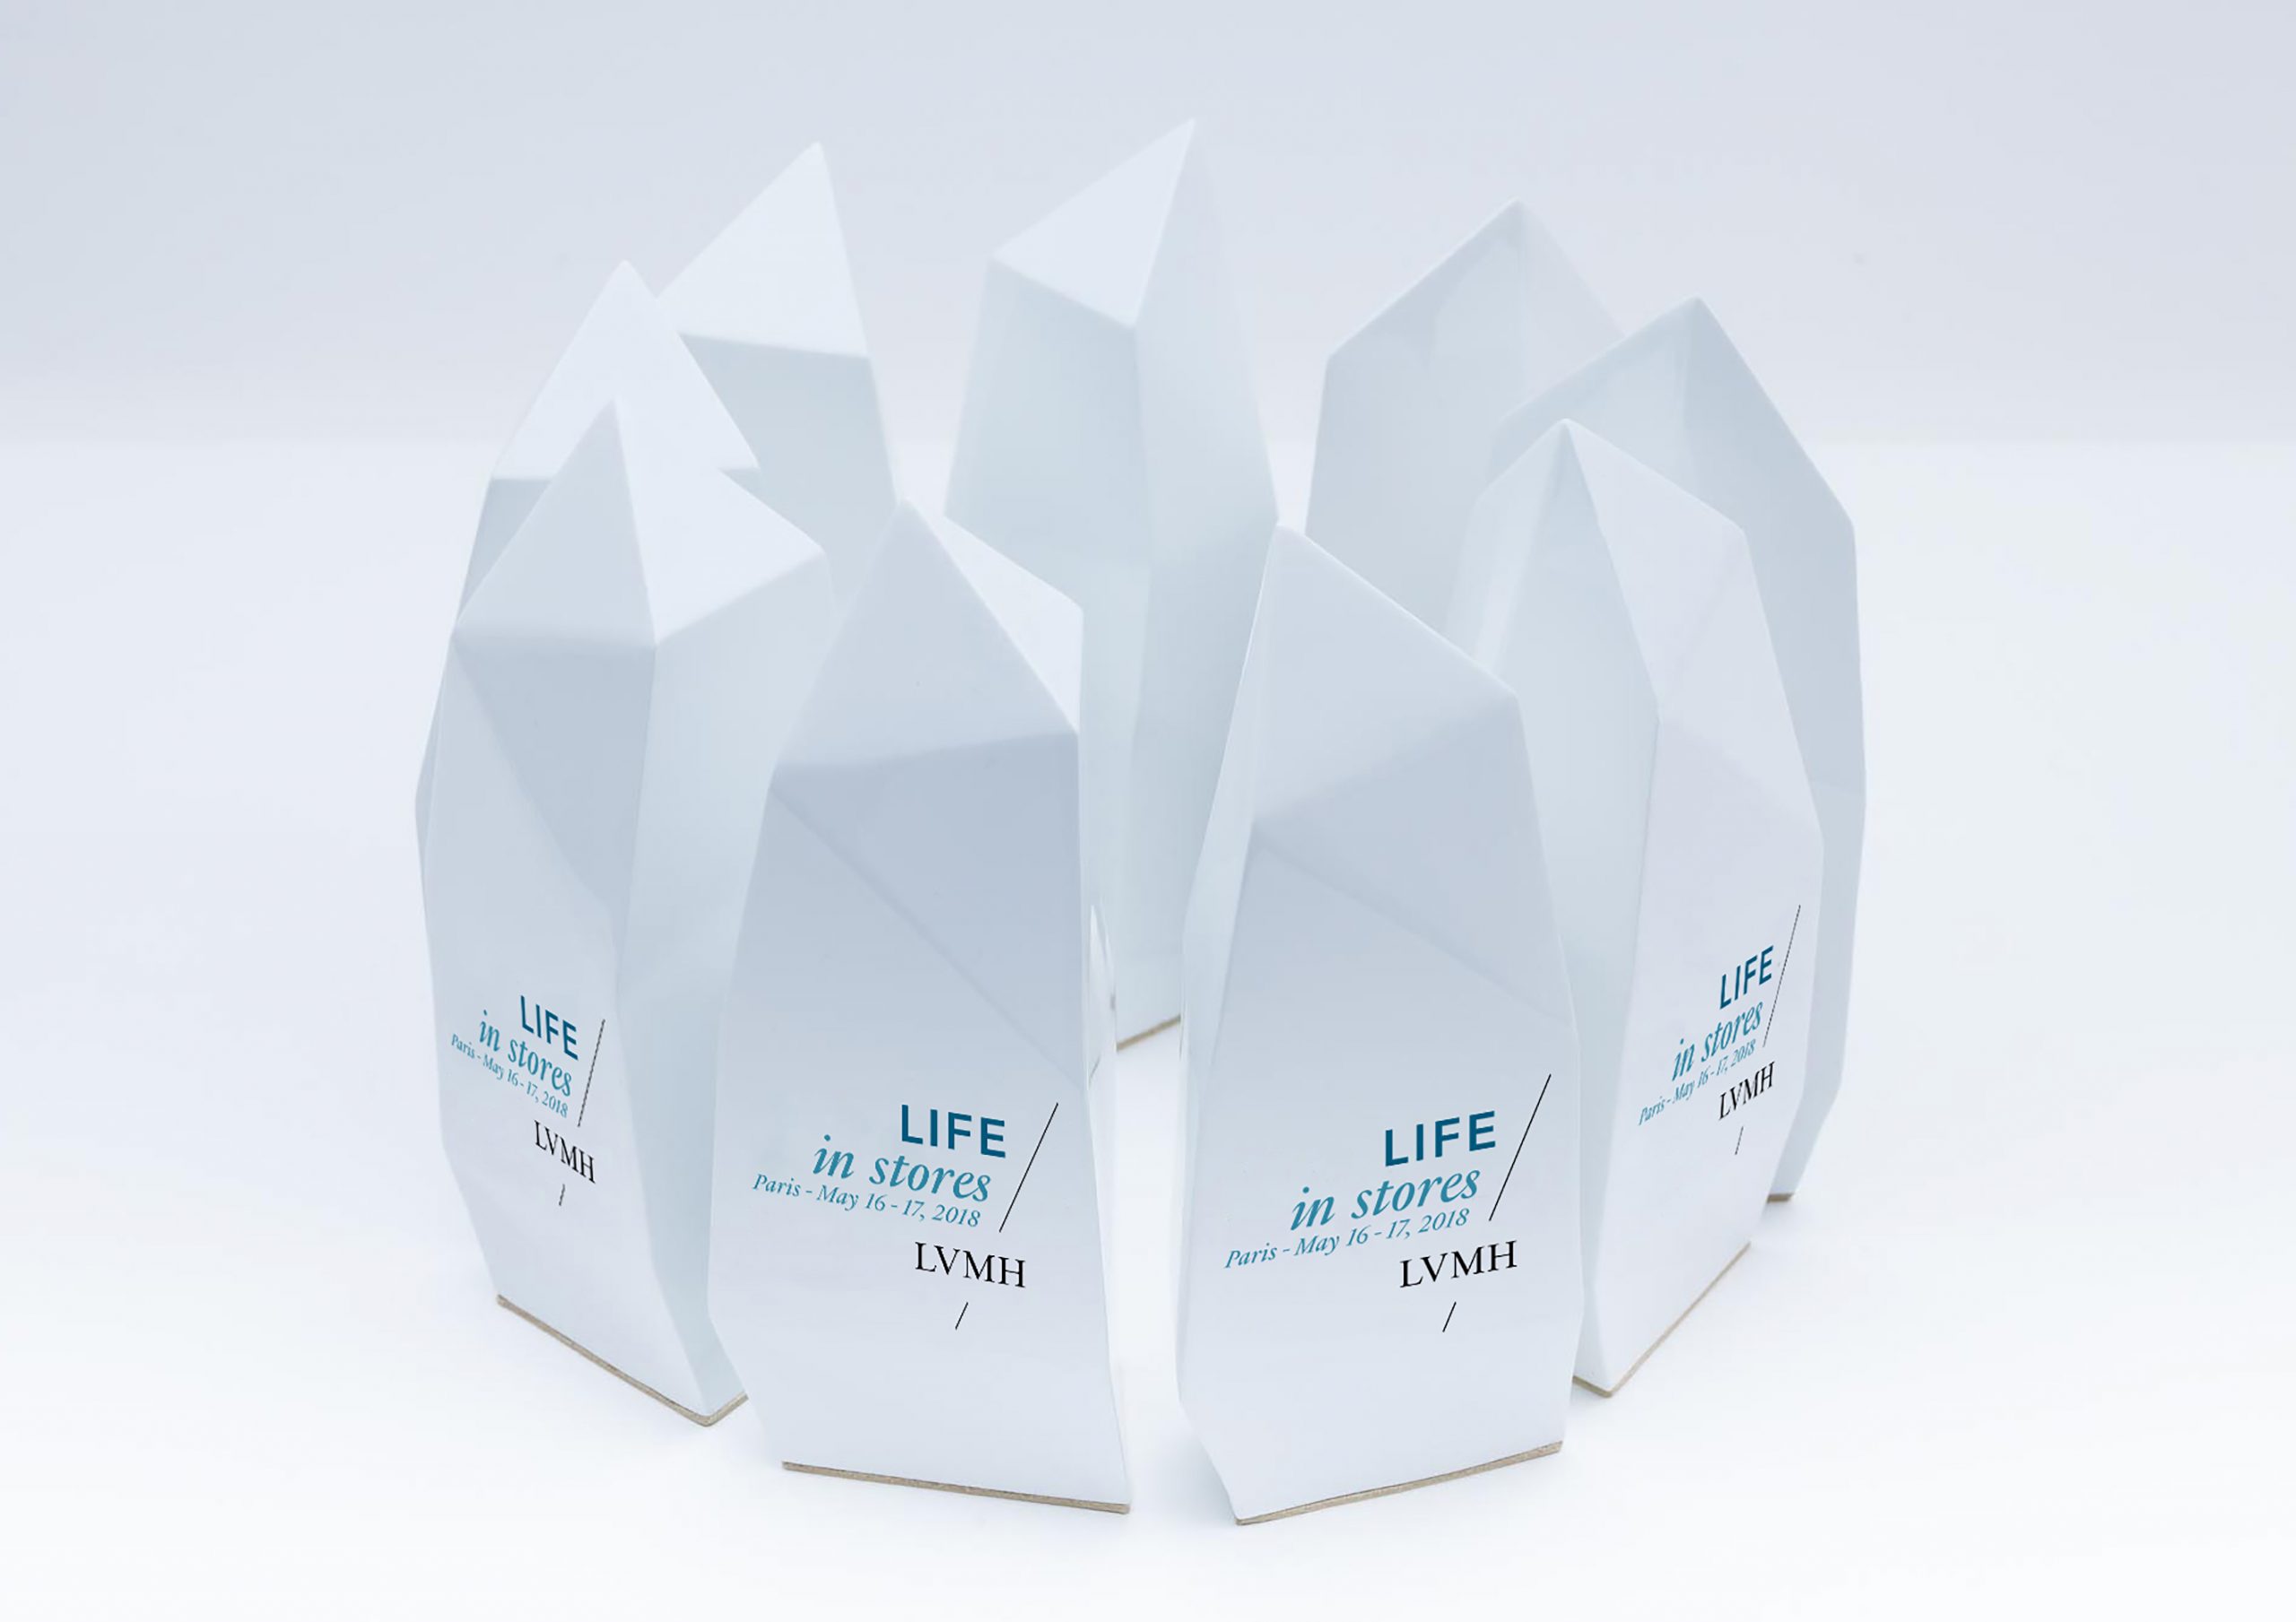 prix RSE LVMH awards programme life